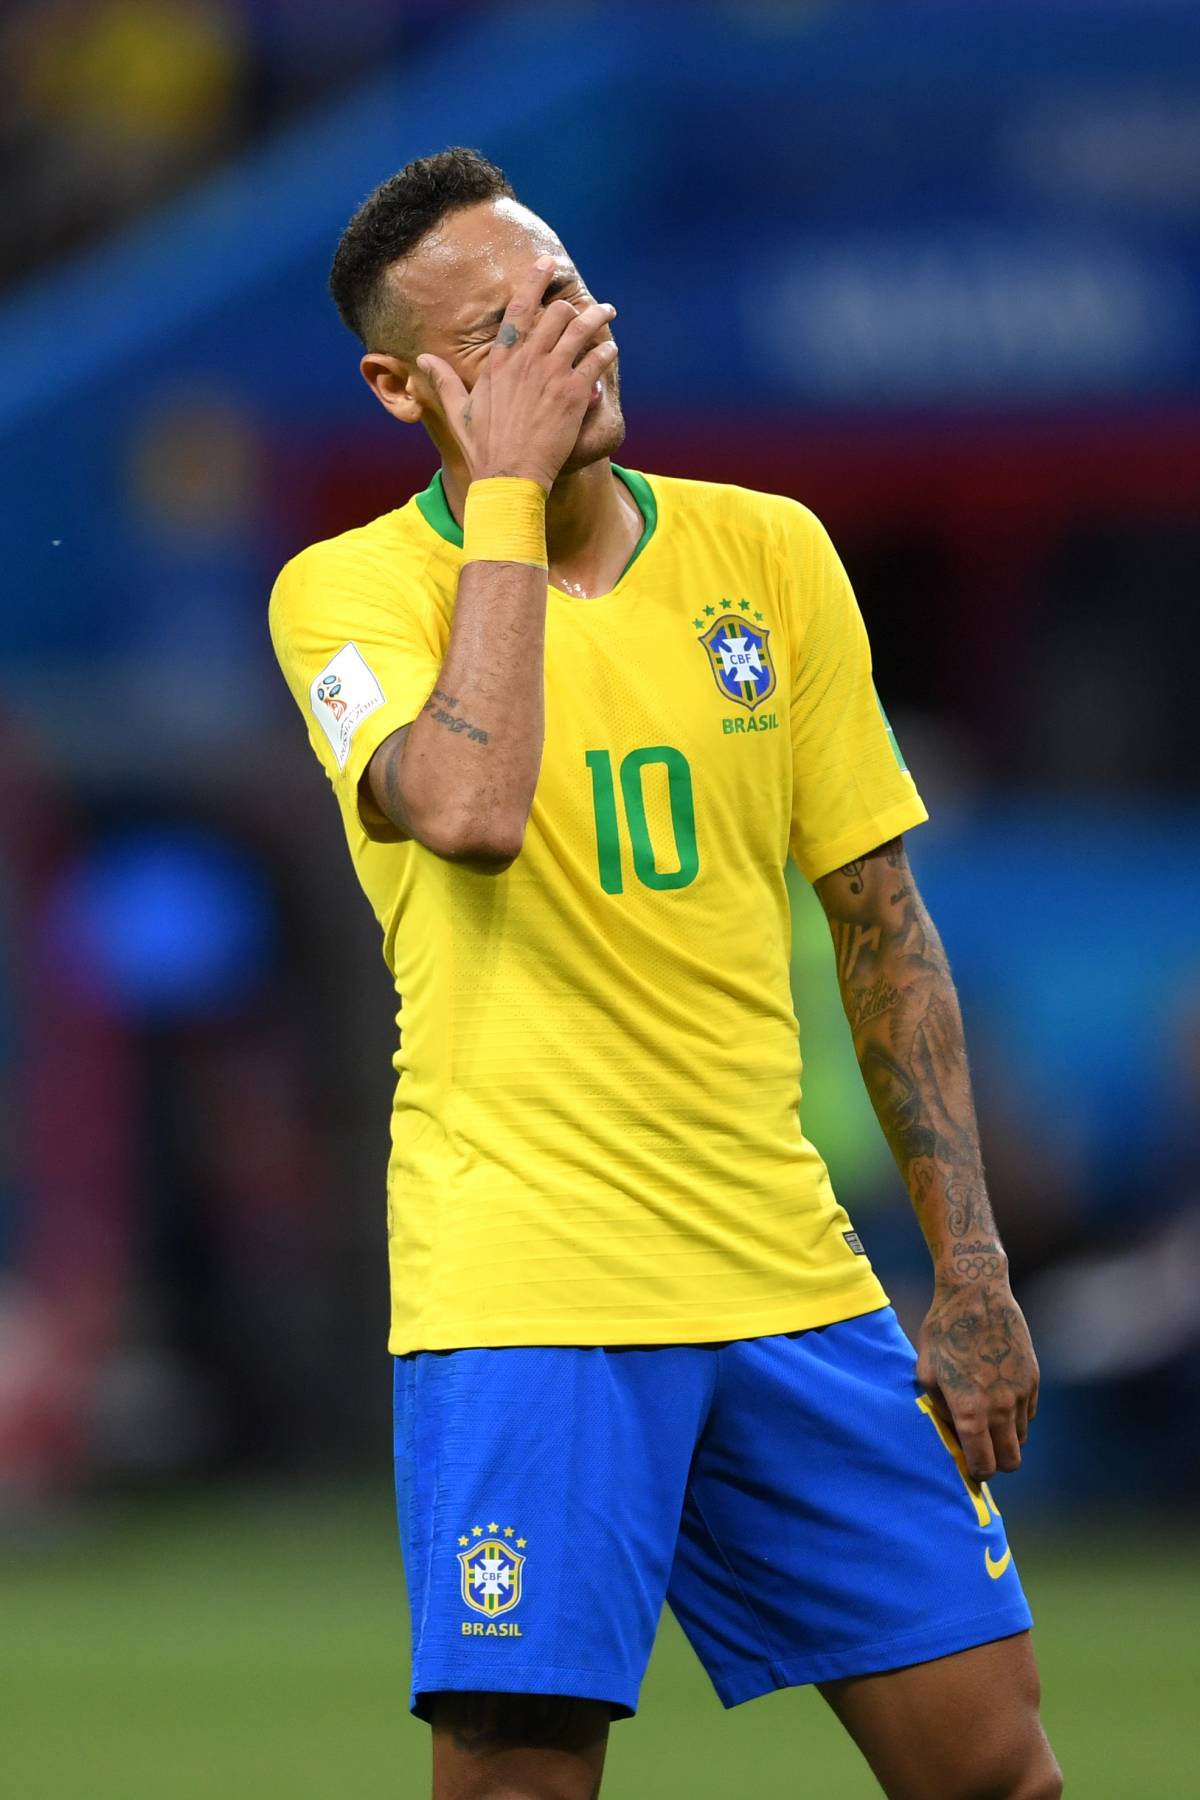 Processo al Brasile, nel mirino c'è Neymar. "Egoista e cascatore"